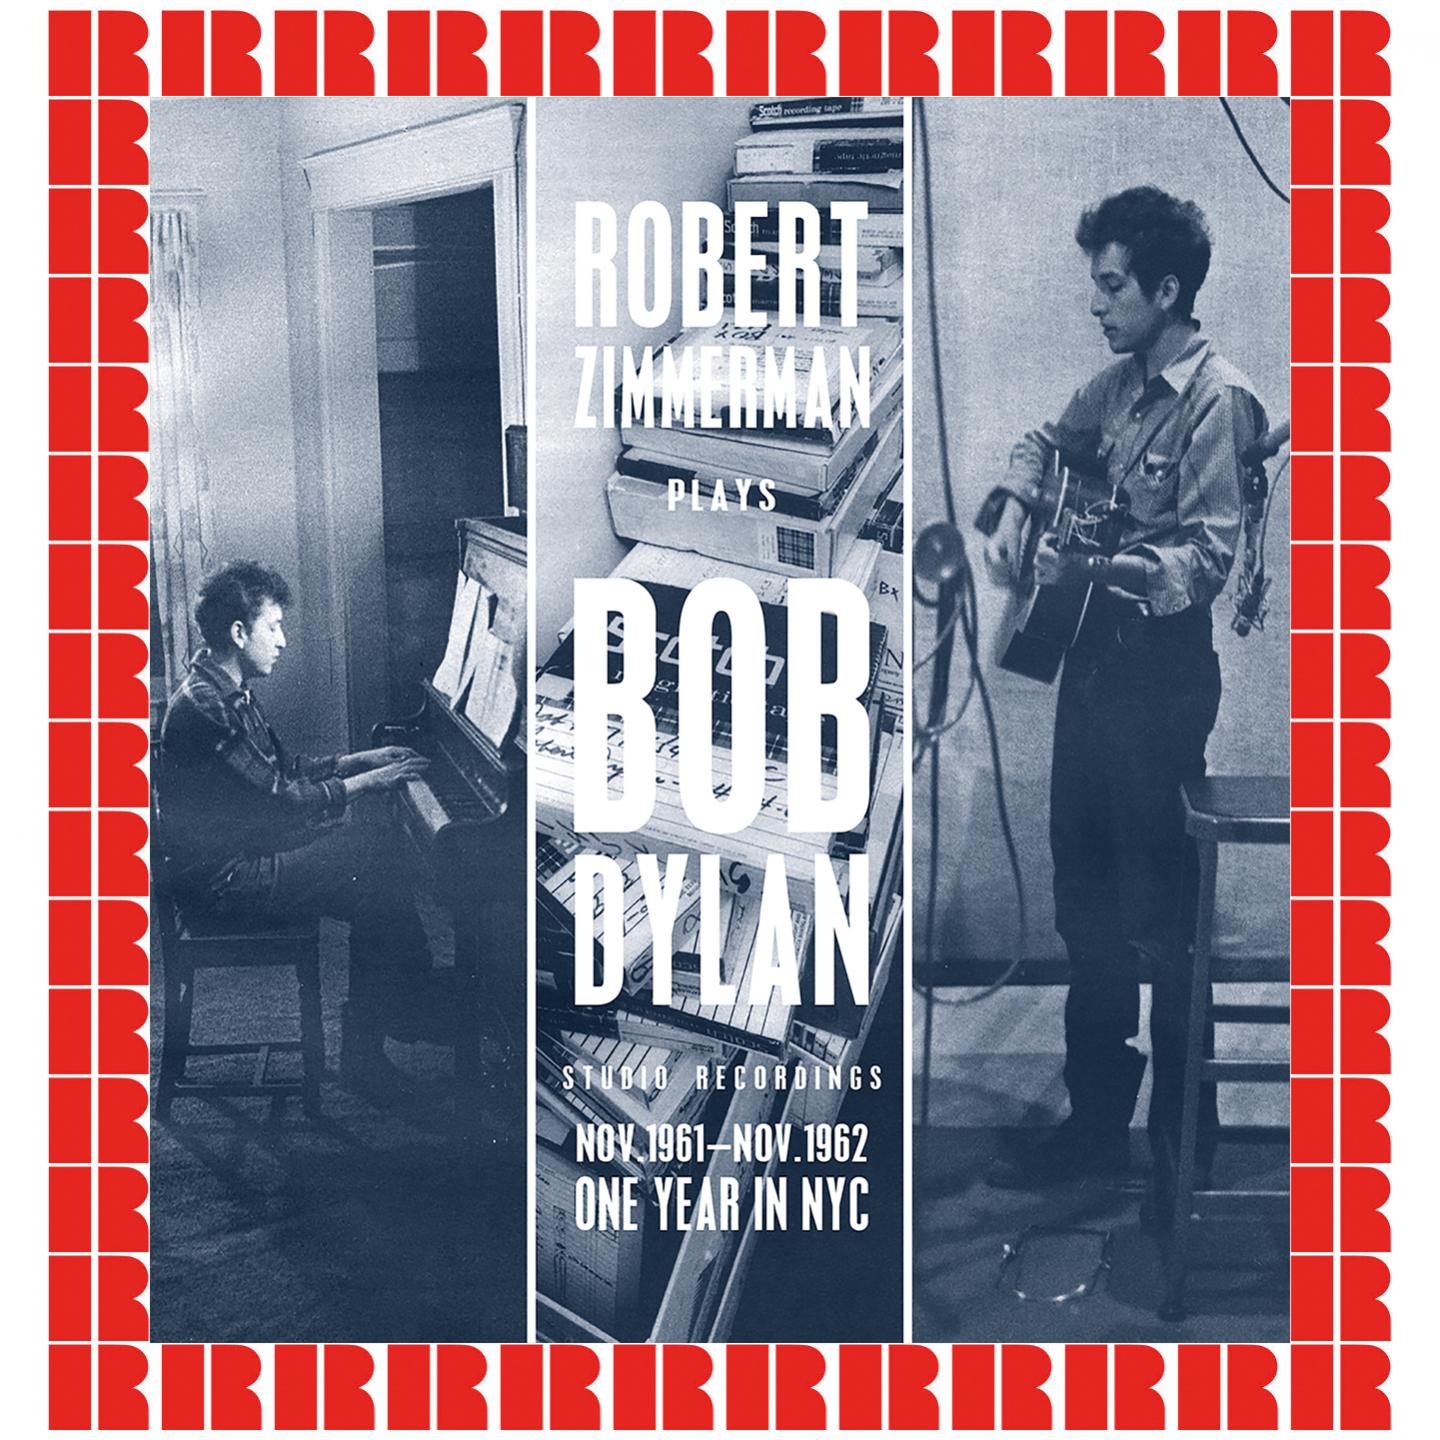 Robert Zimmerman Plays Bob Dylan